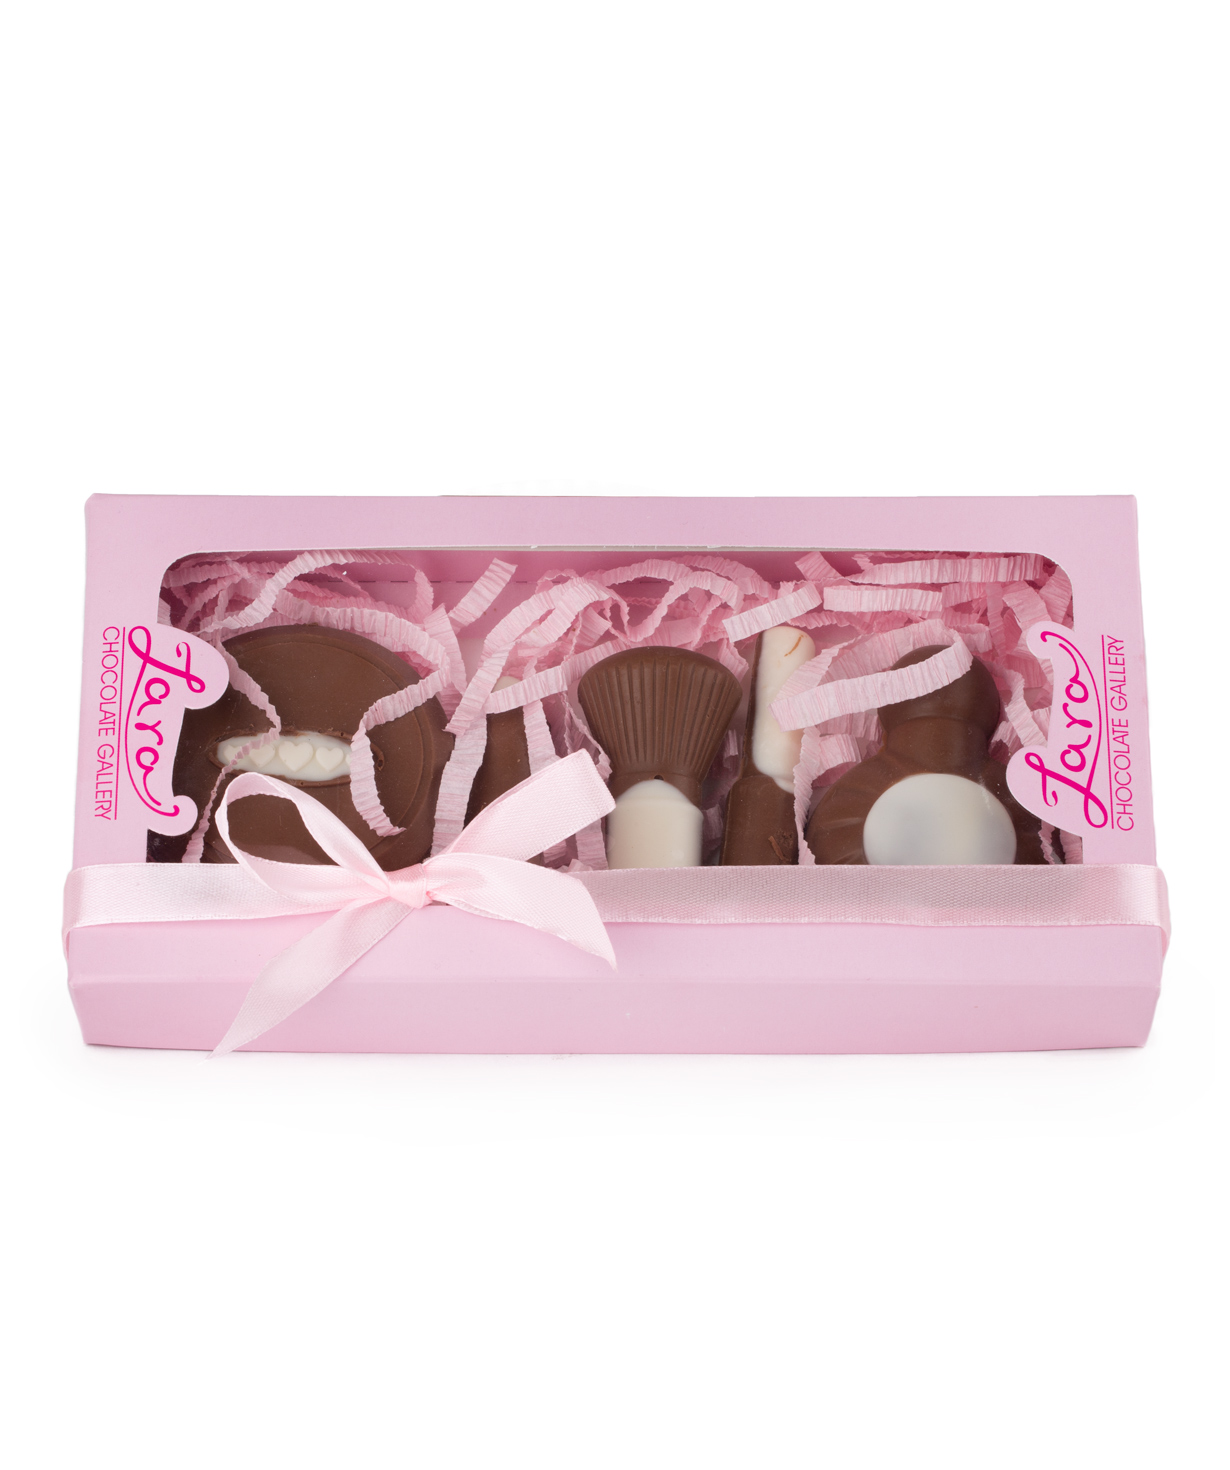 Chocolate collection `Lara Chocolate` Titiz